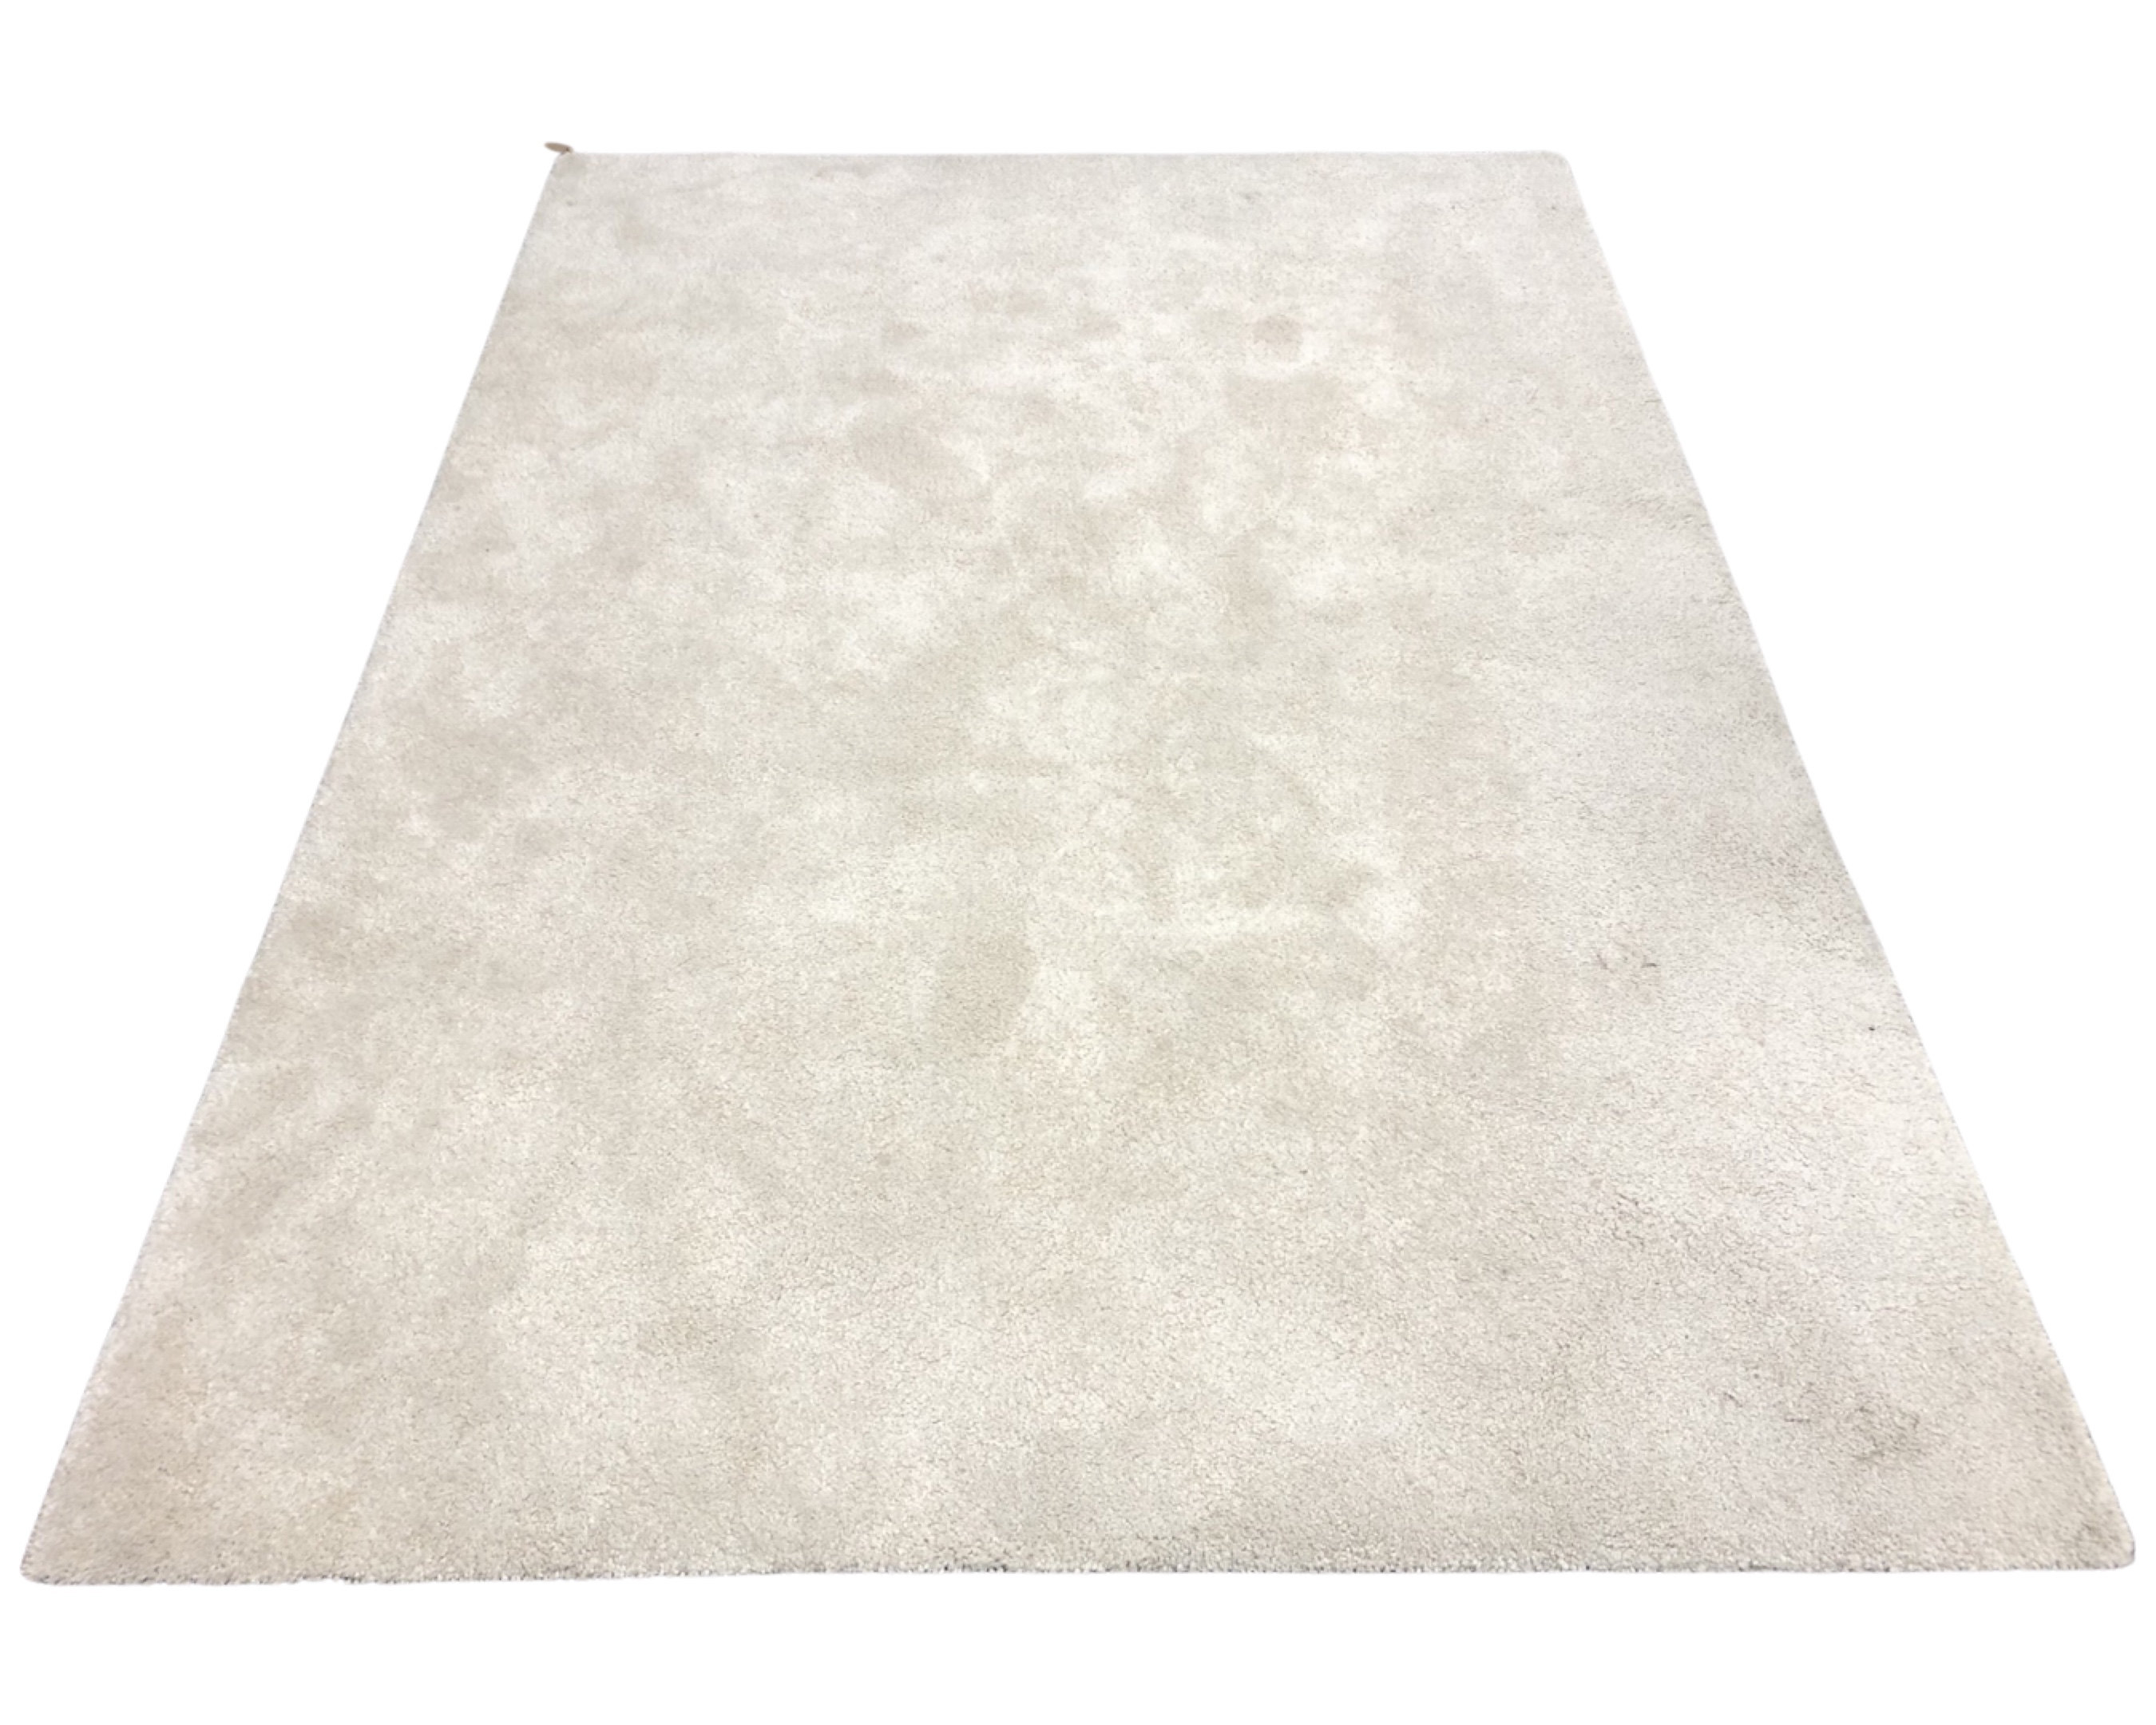 An Ikea Stoense off-white rug, 170 cm x 240 cm.